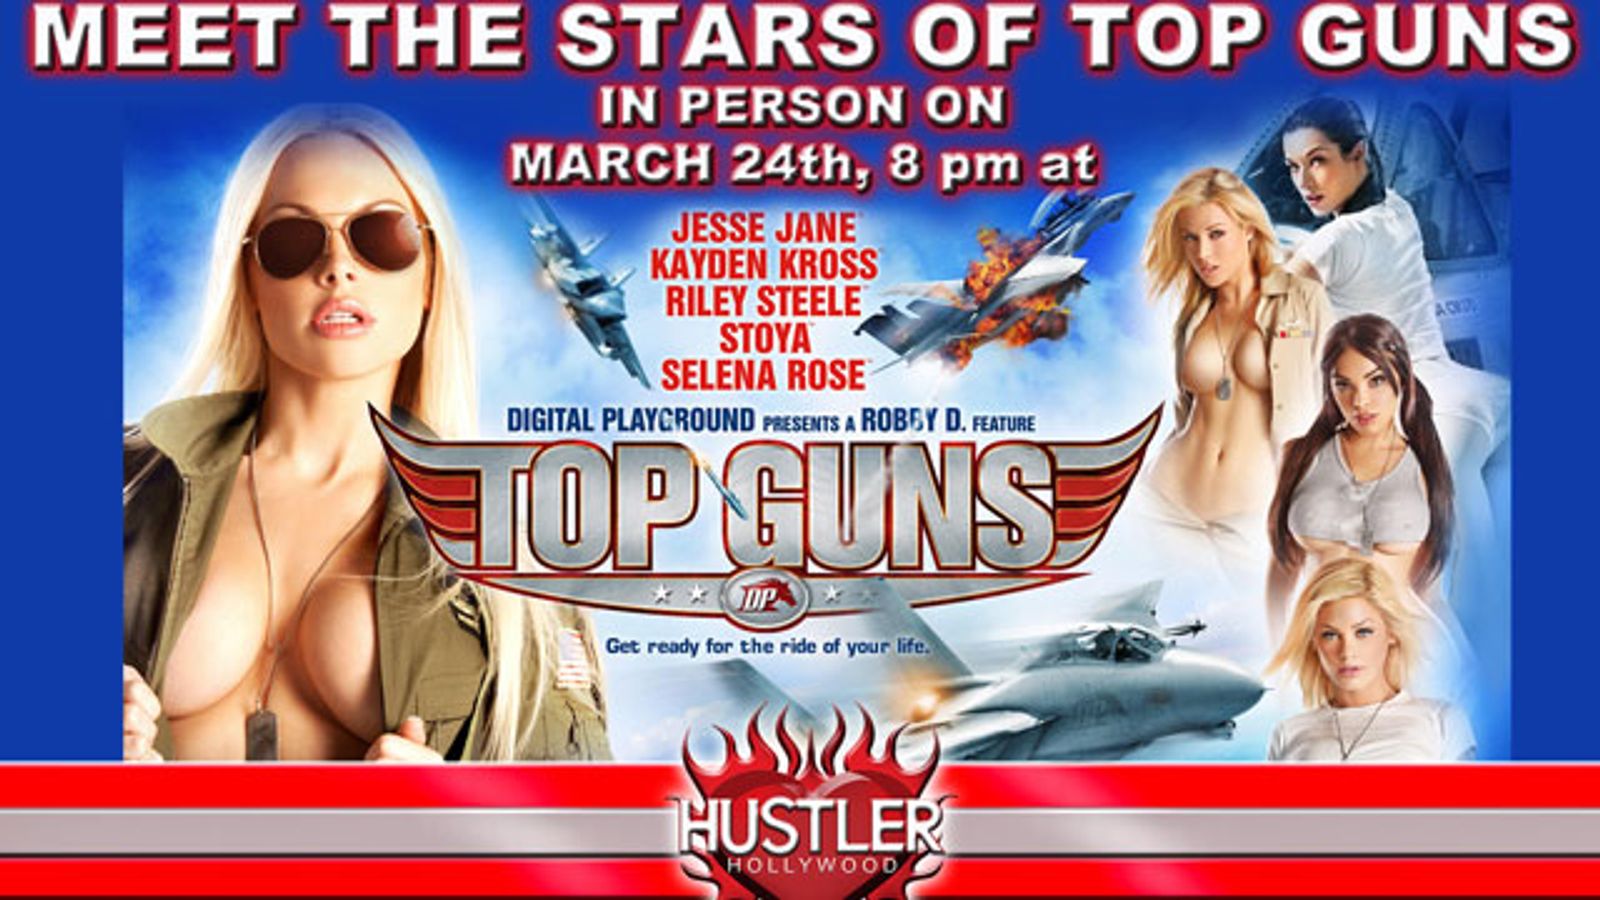 Top Guns Stars to Sign at Hustler Hollywood | AVN